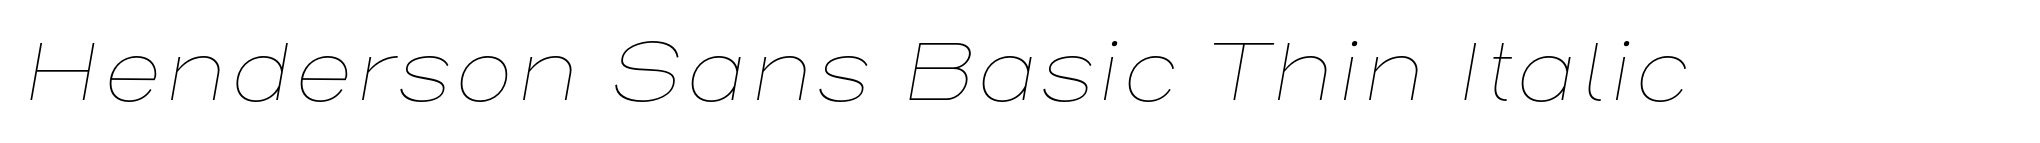 Henderson Sans Basic Thin Italic image